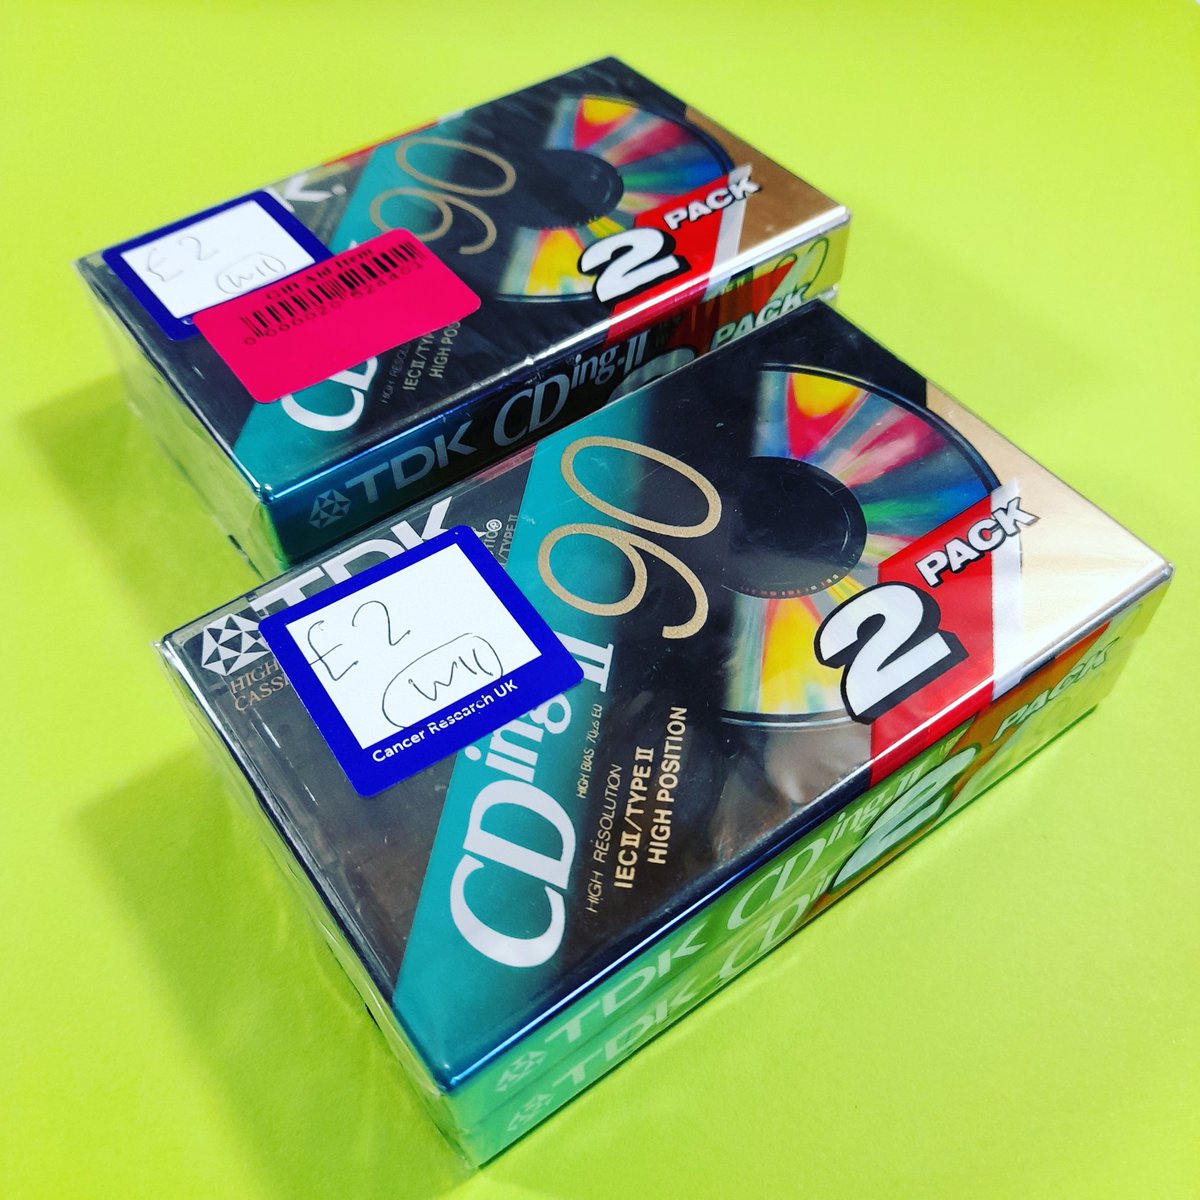 Found 4 box fresh chrome tapes to use in my four track recorder for £4 today. I love charity shops 😁👌#tape #cassette #tapecassette #lofi #chrometape #fourtracktape #fourtrackrecorder #TDK #analog #analogrecording #homestudio #new #newoldstock #lofimusic #lofimusicmaking